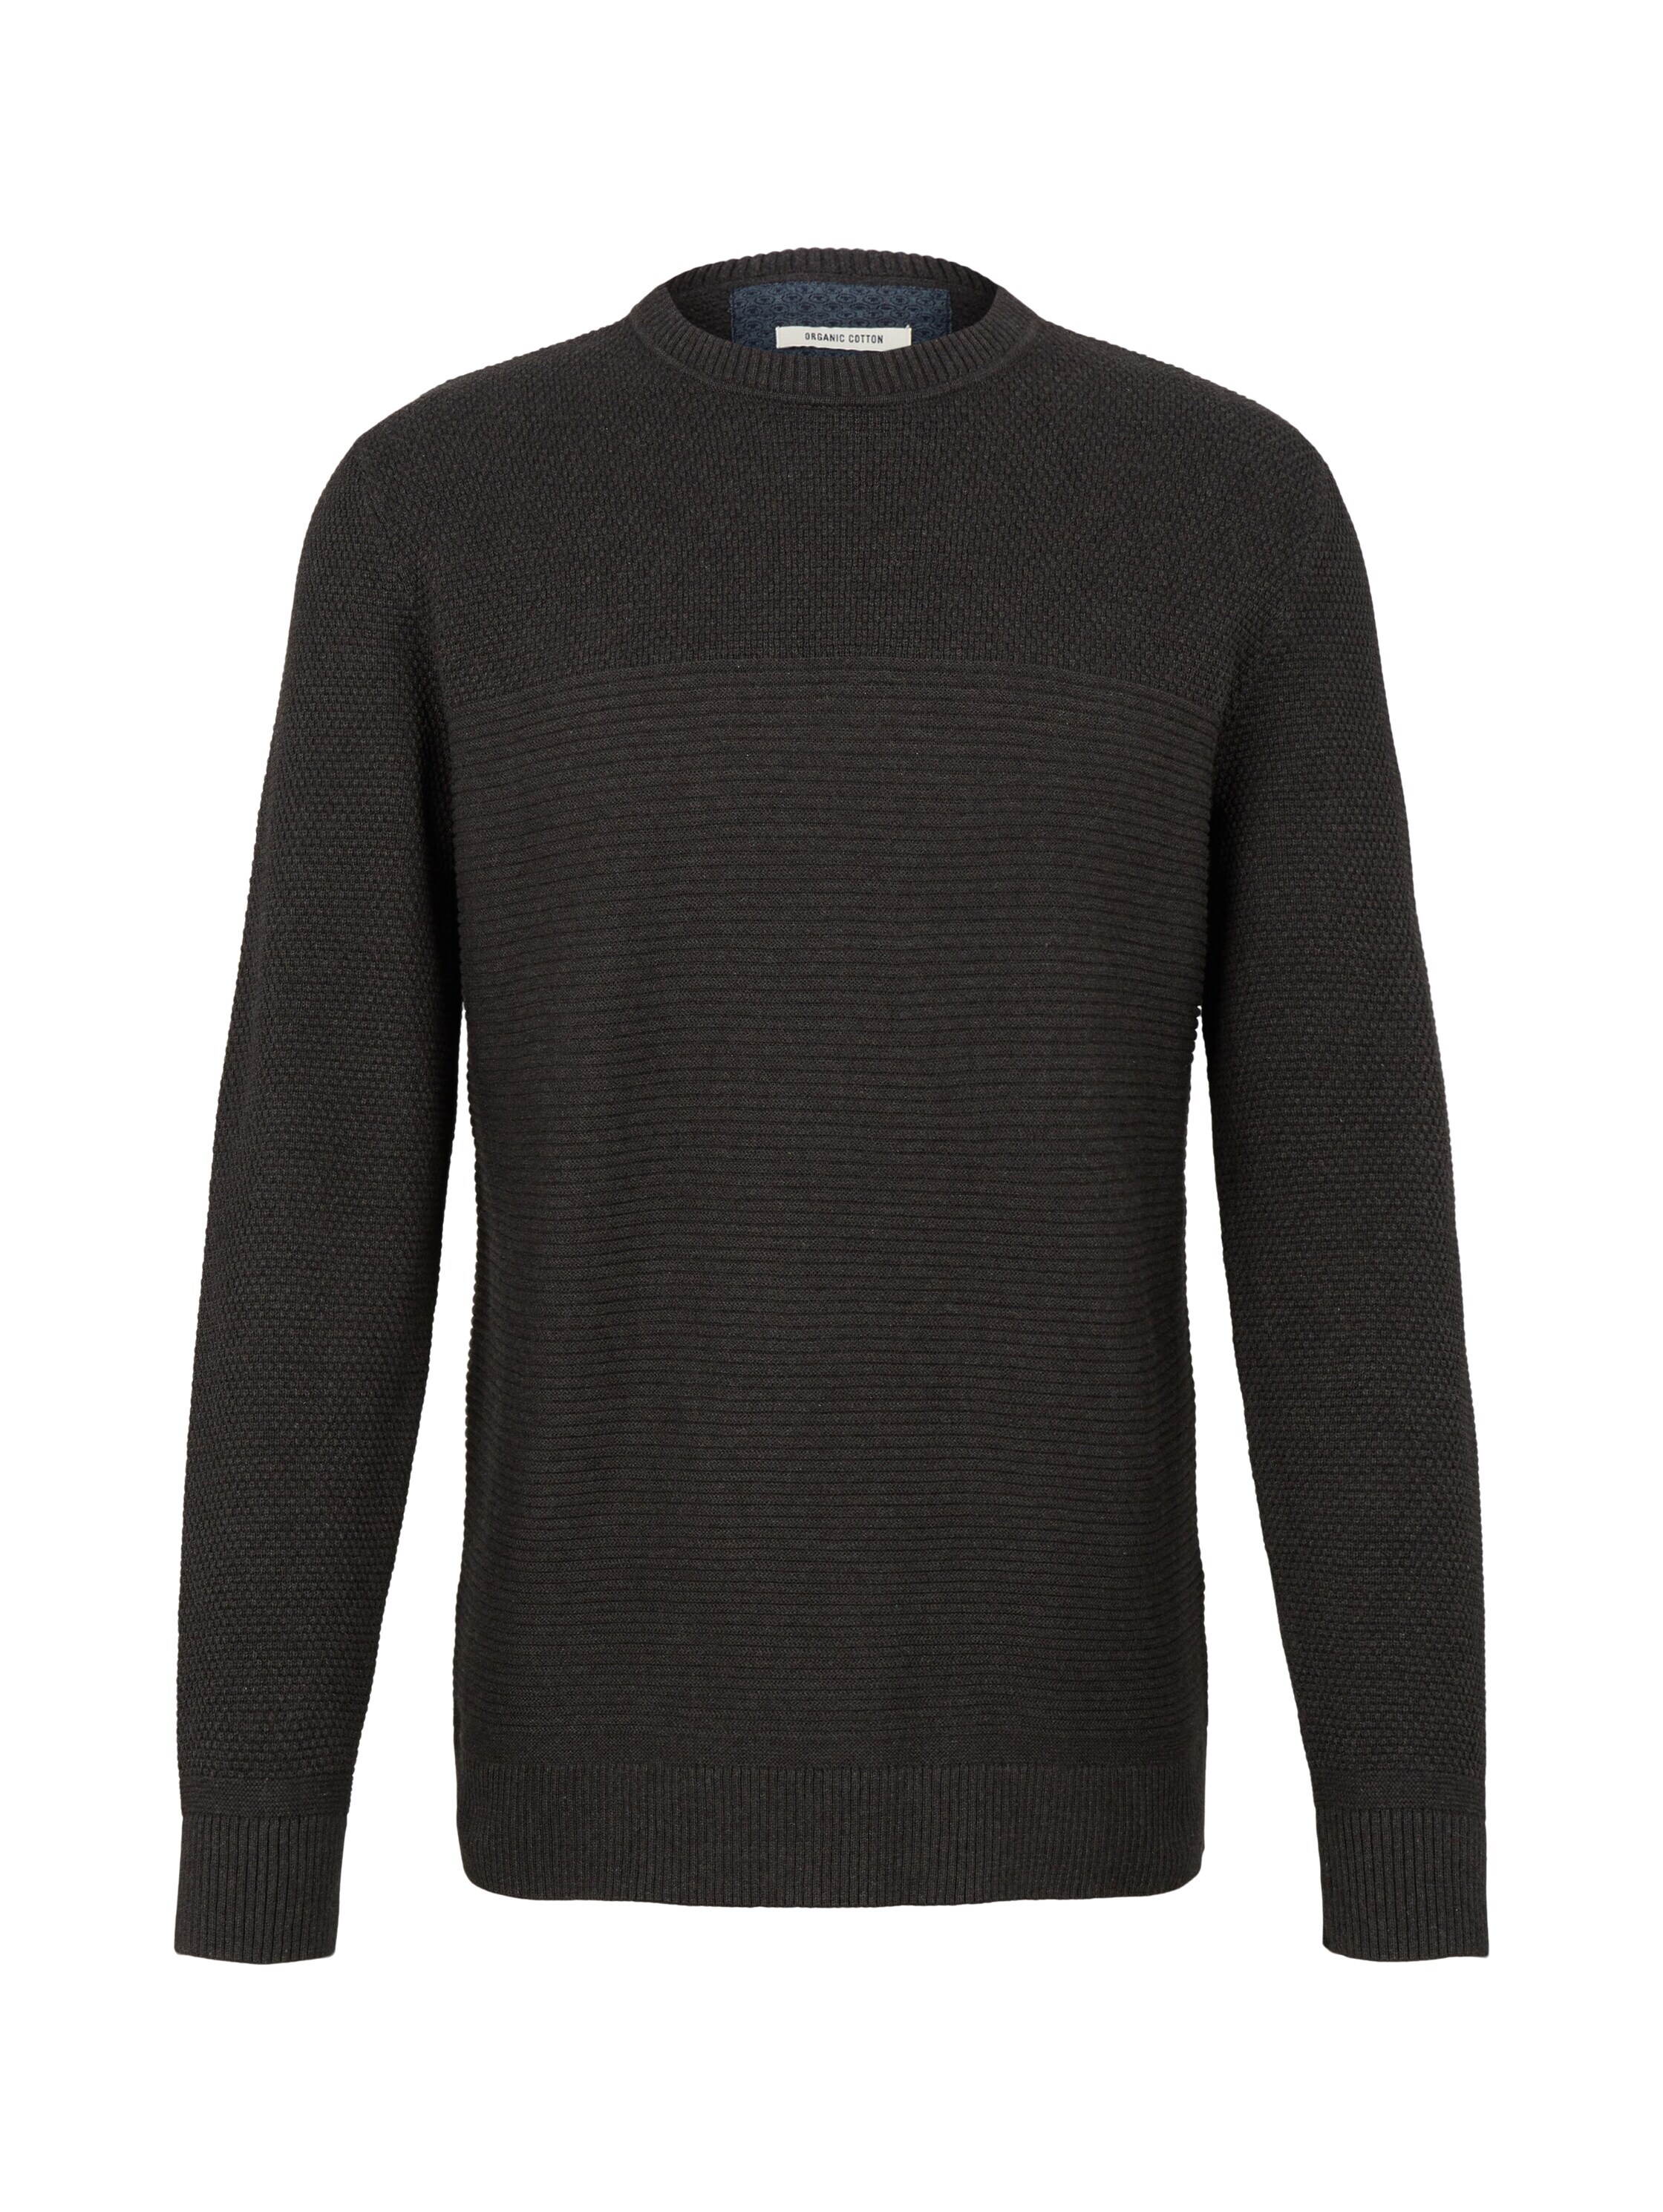 Пуловер Tom Tailor, серый пуловер tom tailor для мужчин серый размер s 46